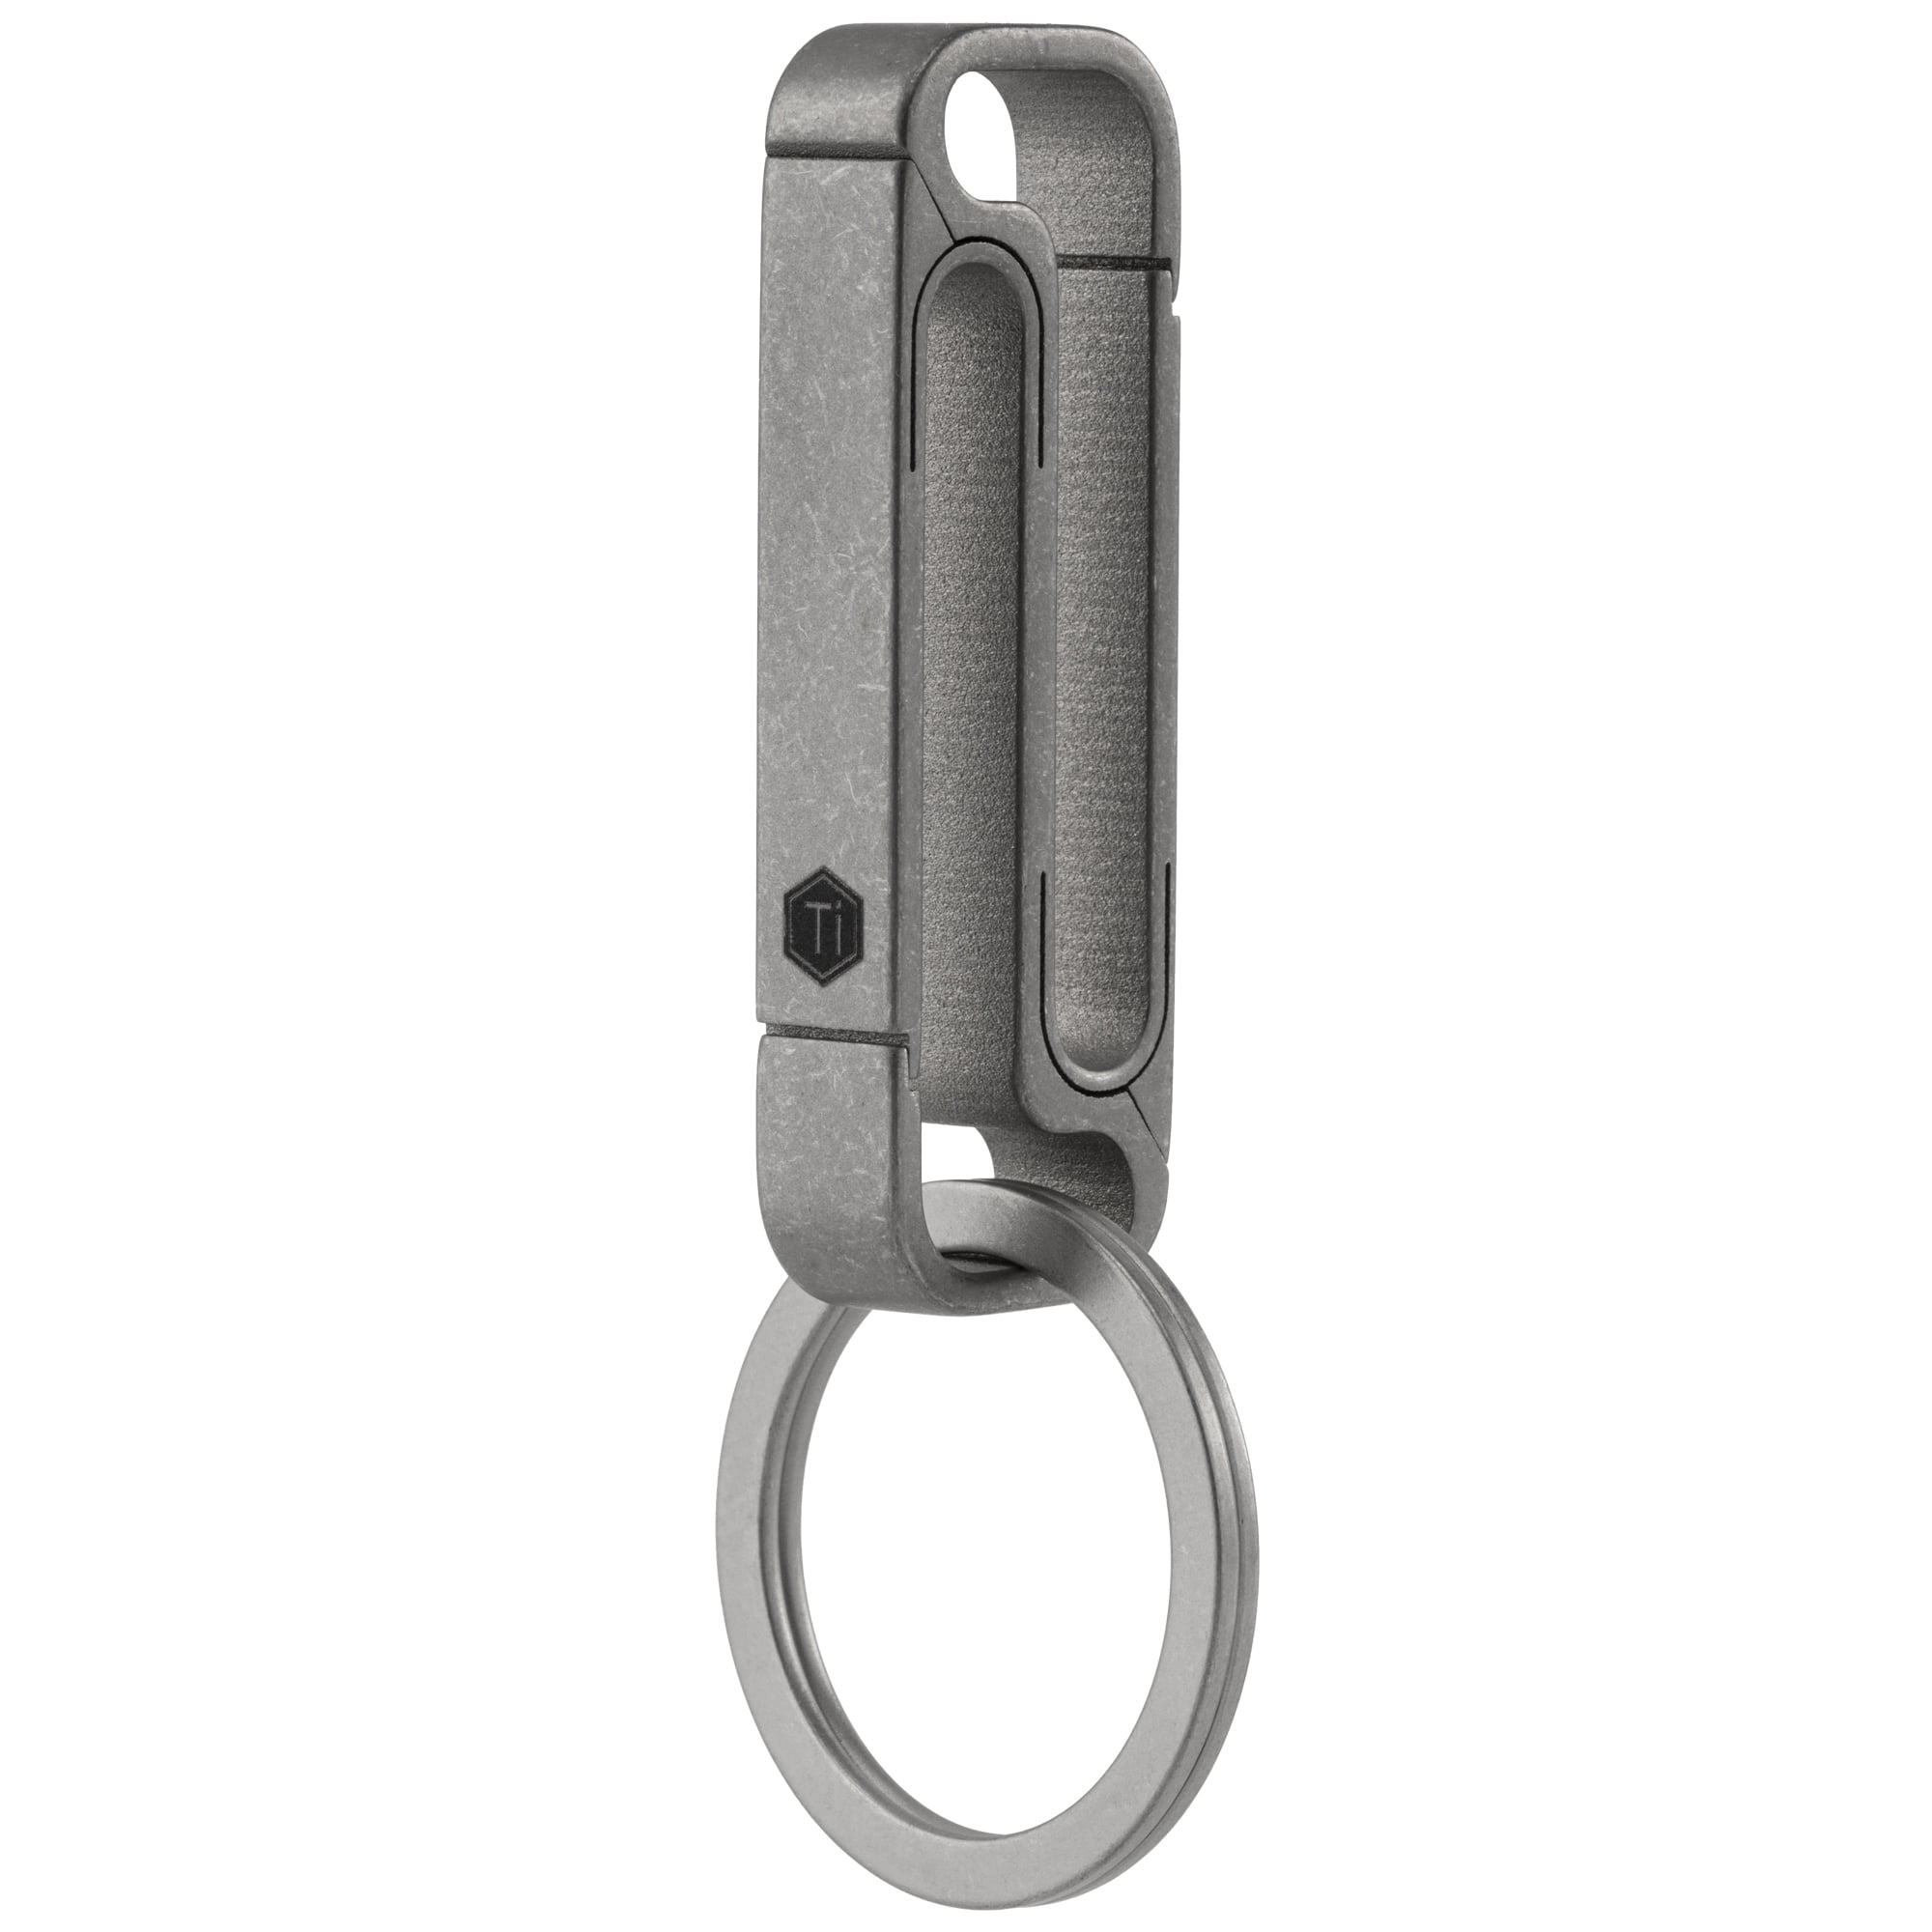 KeyUnity Double Side Carabiner Keychain Clip, Titanium Belt Key Holder Clips  for Car Keys or Small Tools, KM11, Black 